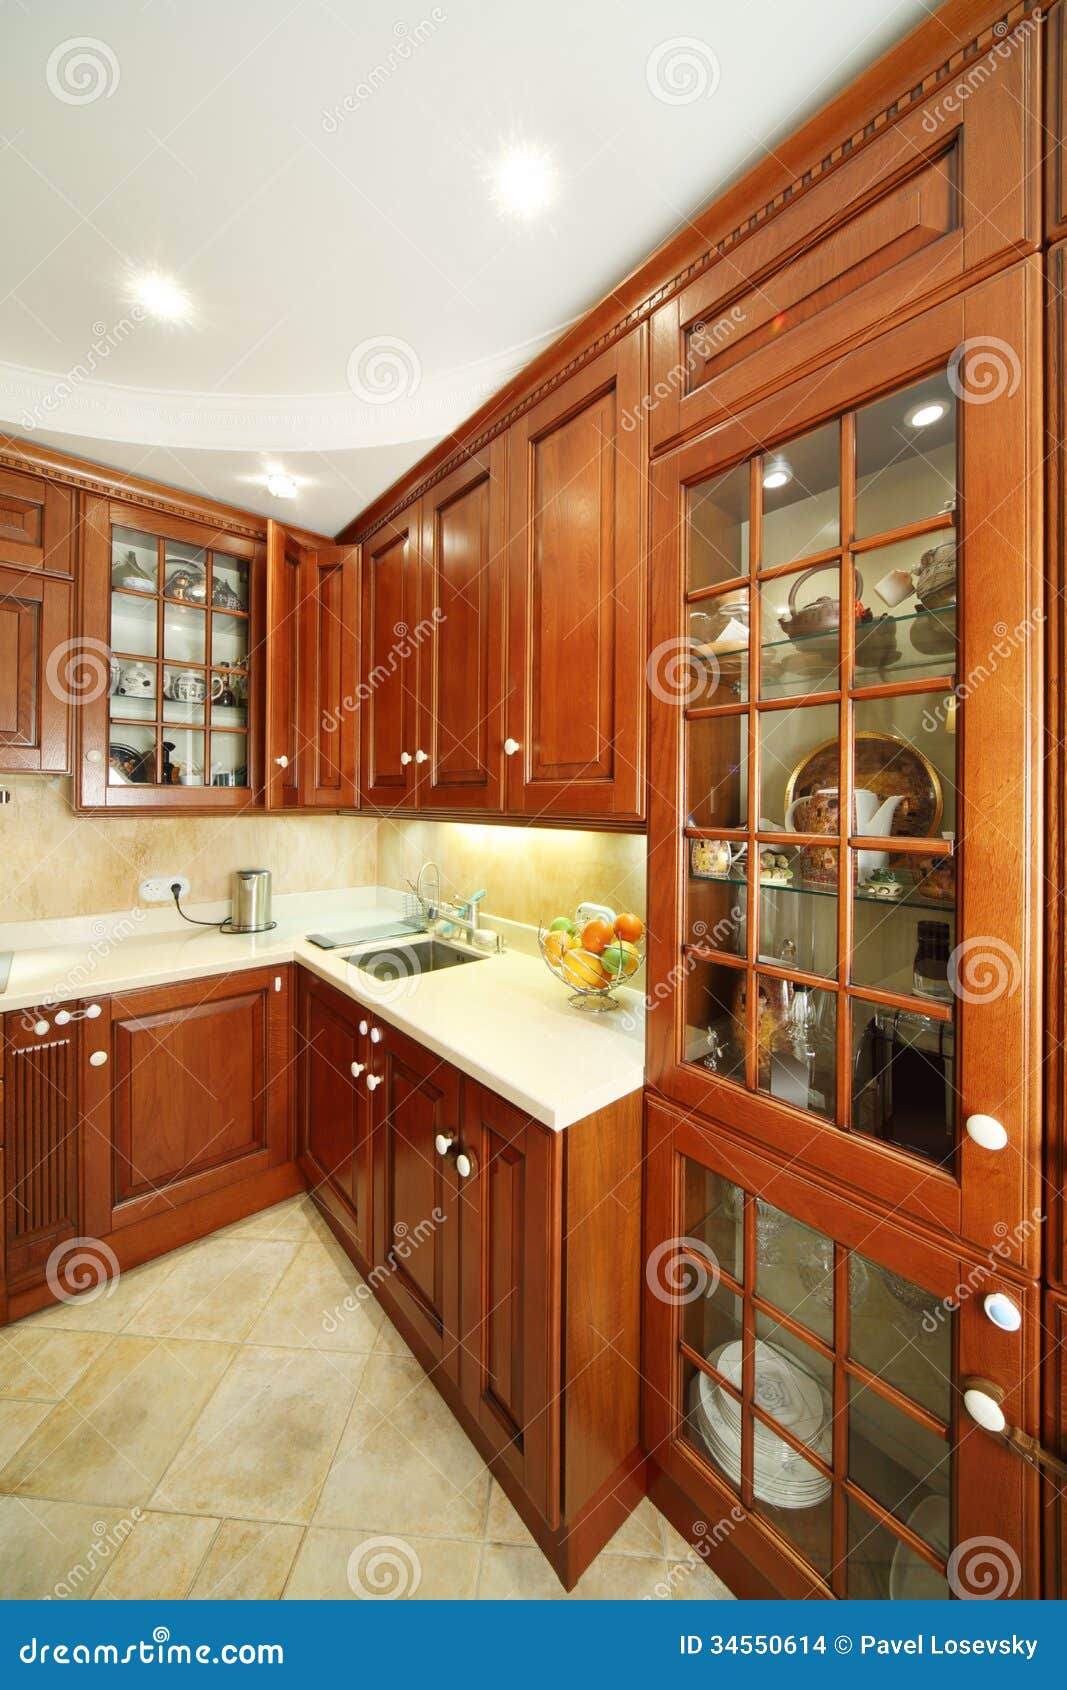 Wooden Kitchen Cupboards Sink And Kitchen Countertops